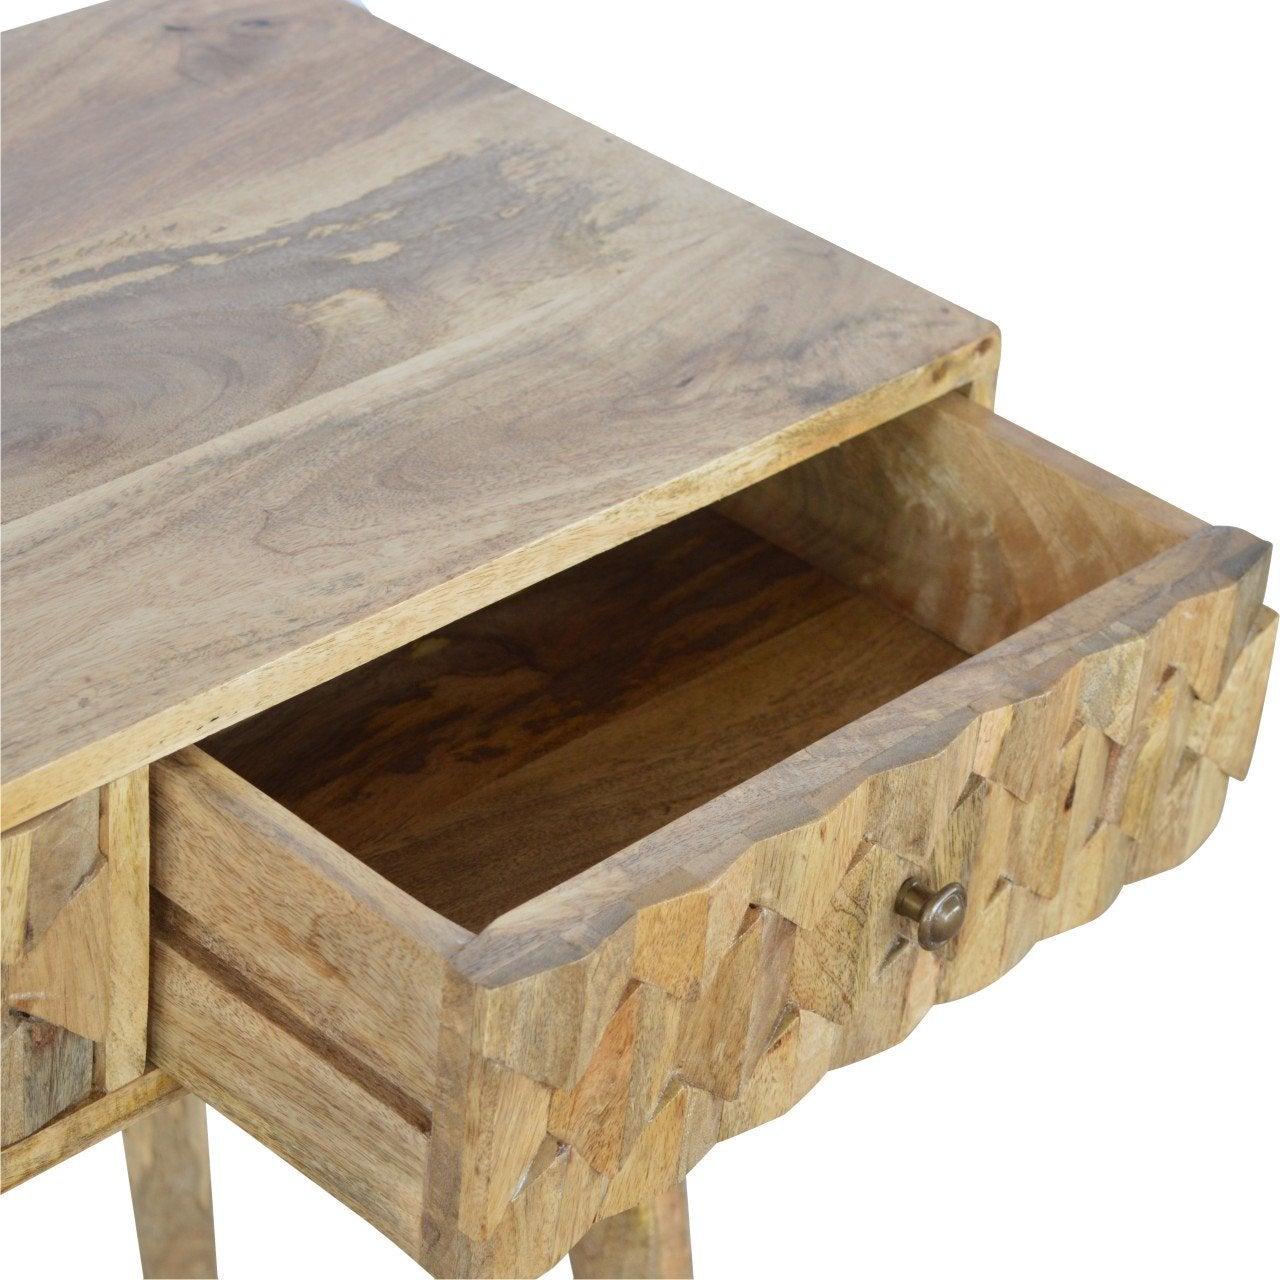 Pineapple carved console table - crimblefest furniture - image 6